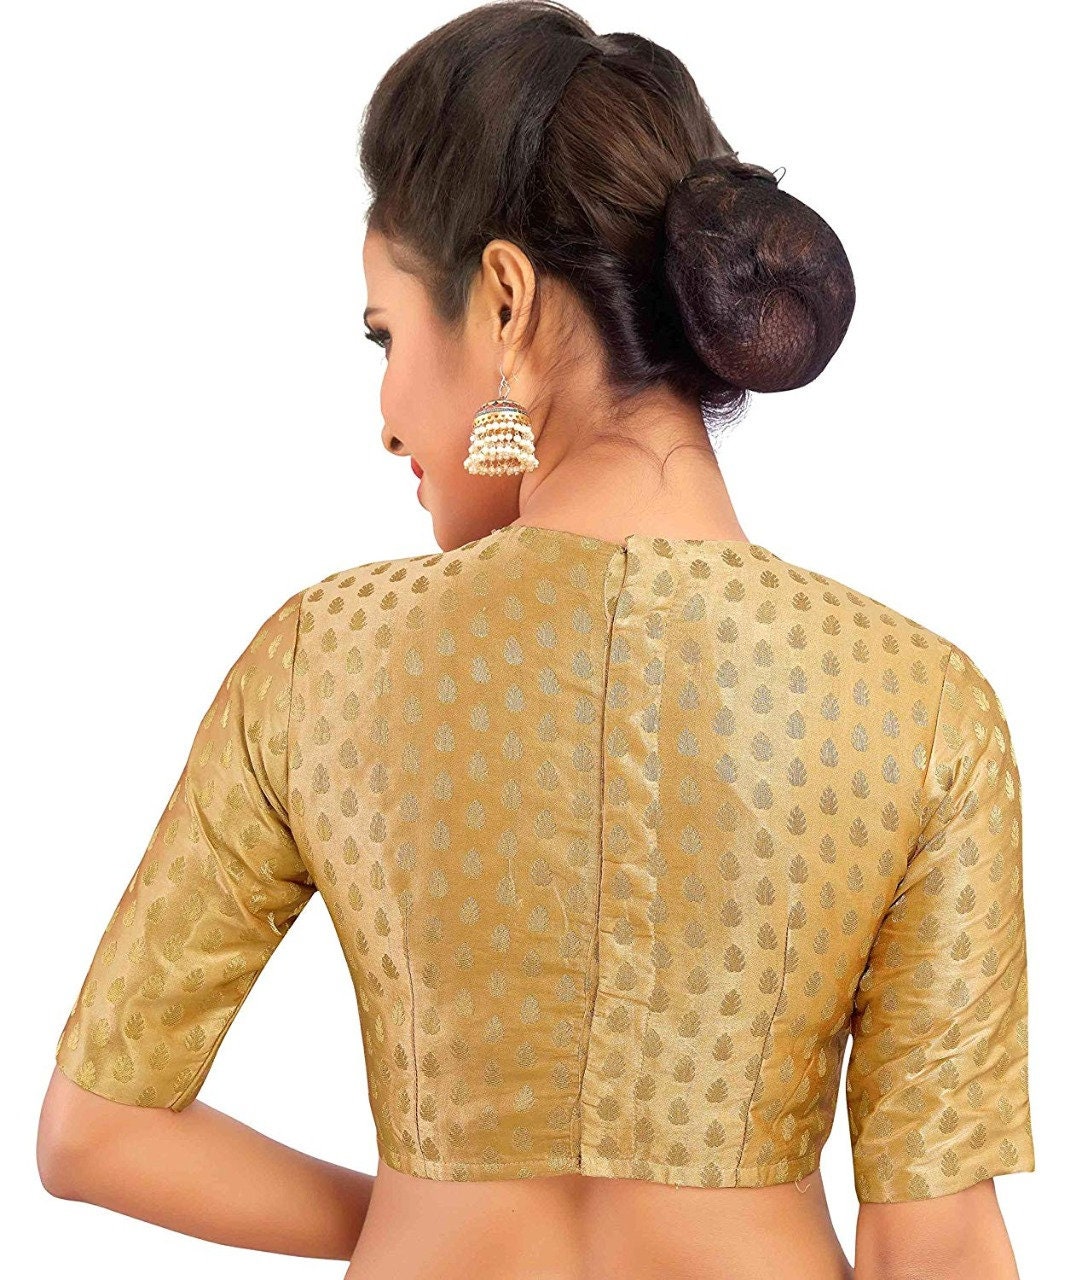 Jewel Neck Readymade Stitched Brocade Saree Blouse Poly Silk Fabric Indian  Sari Choli Tunic Wedding Top Women (Light Golden, Small-32) at   Women's Clothing store